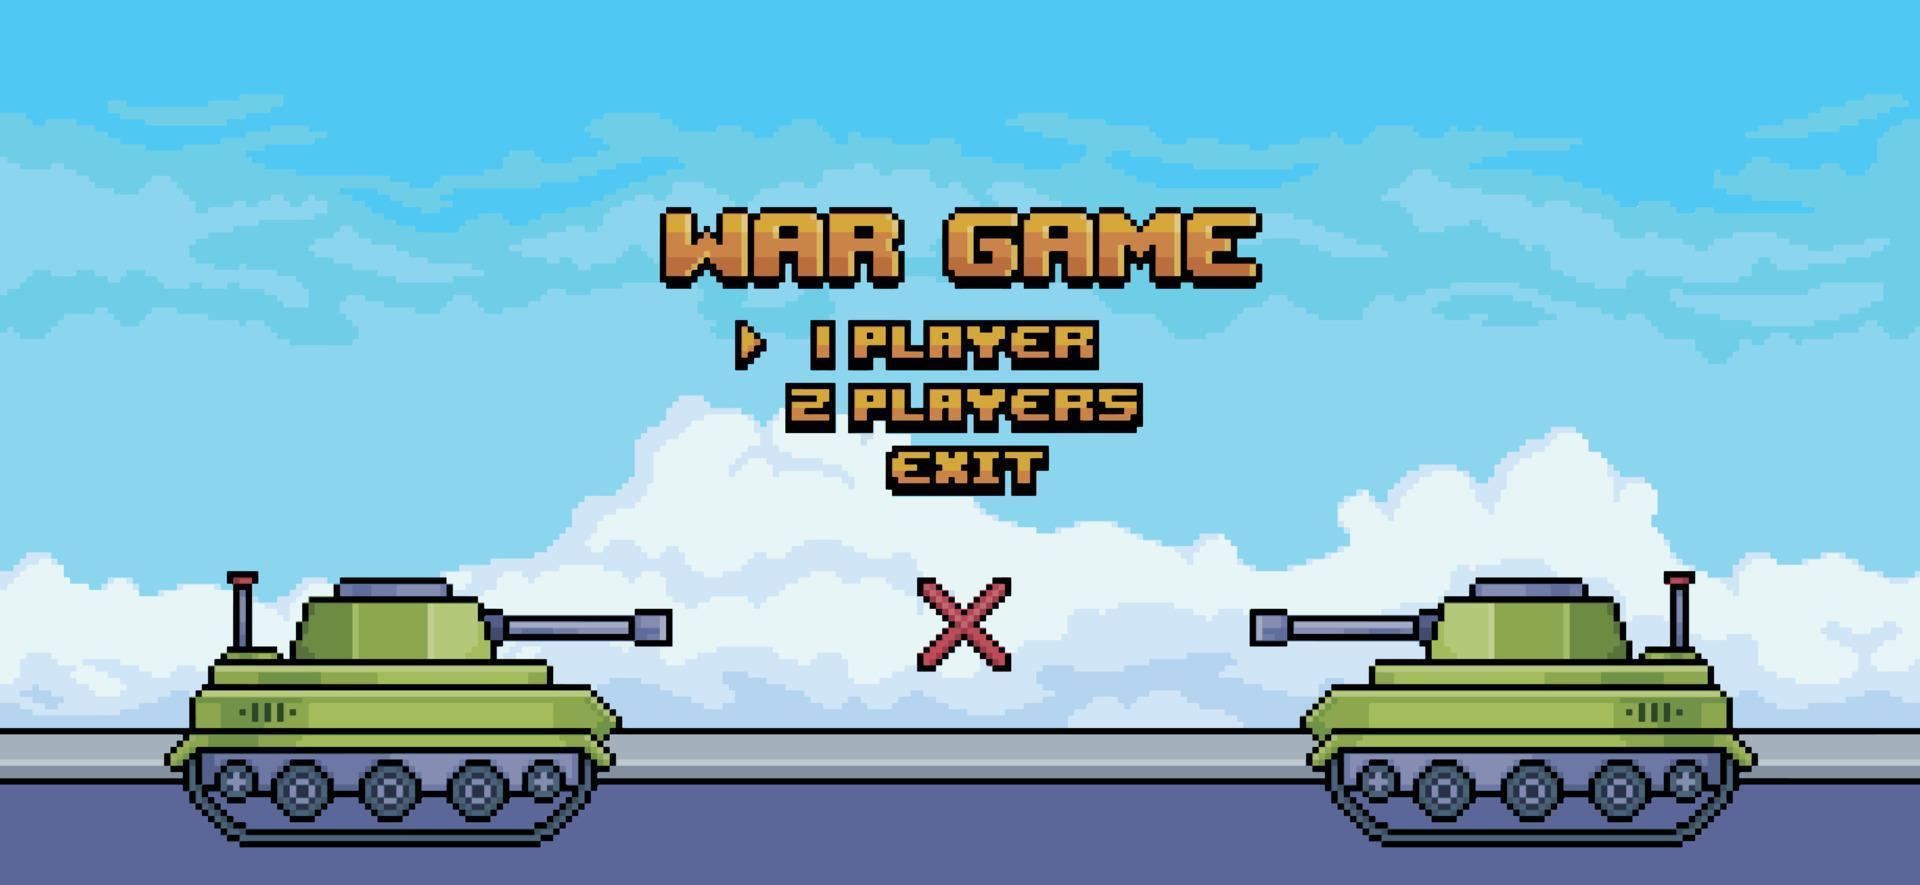 Pixel art war game splash screen with war tanks on the street, vector background for 8bit game